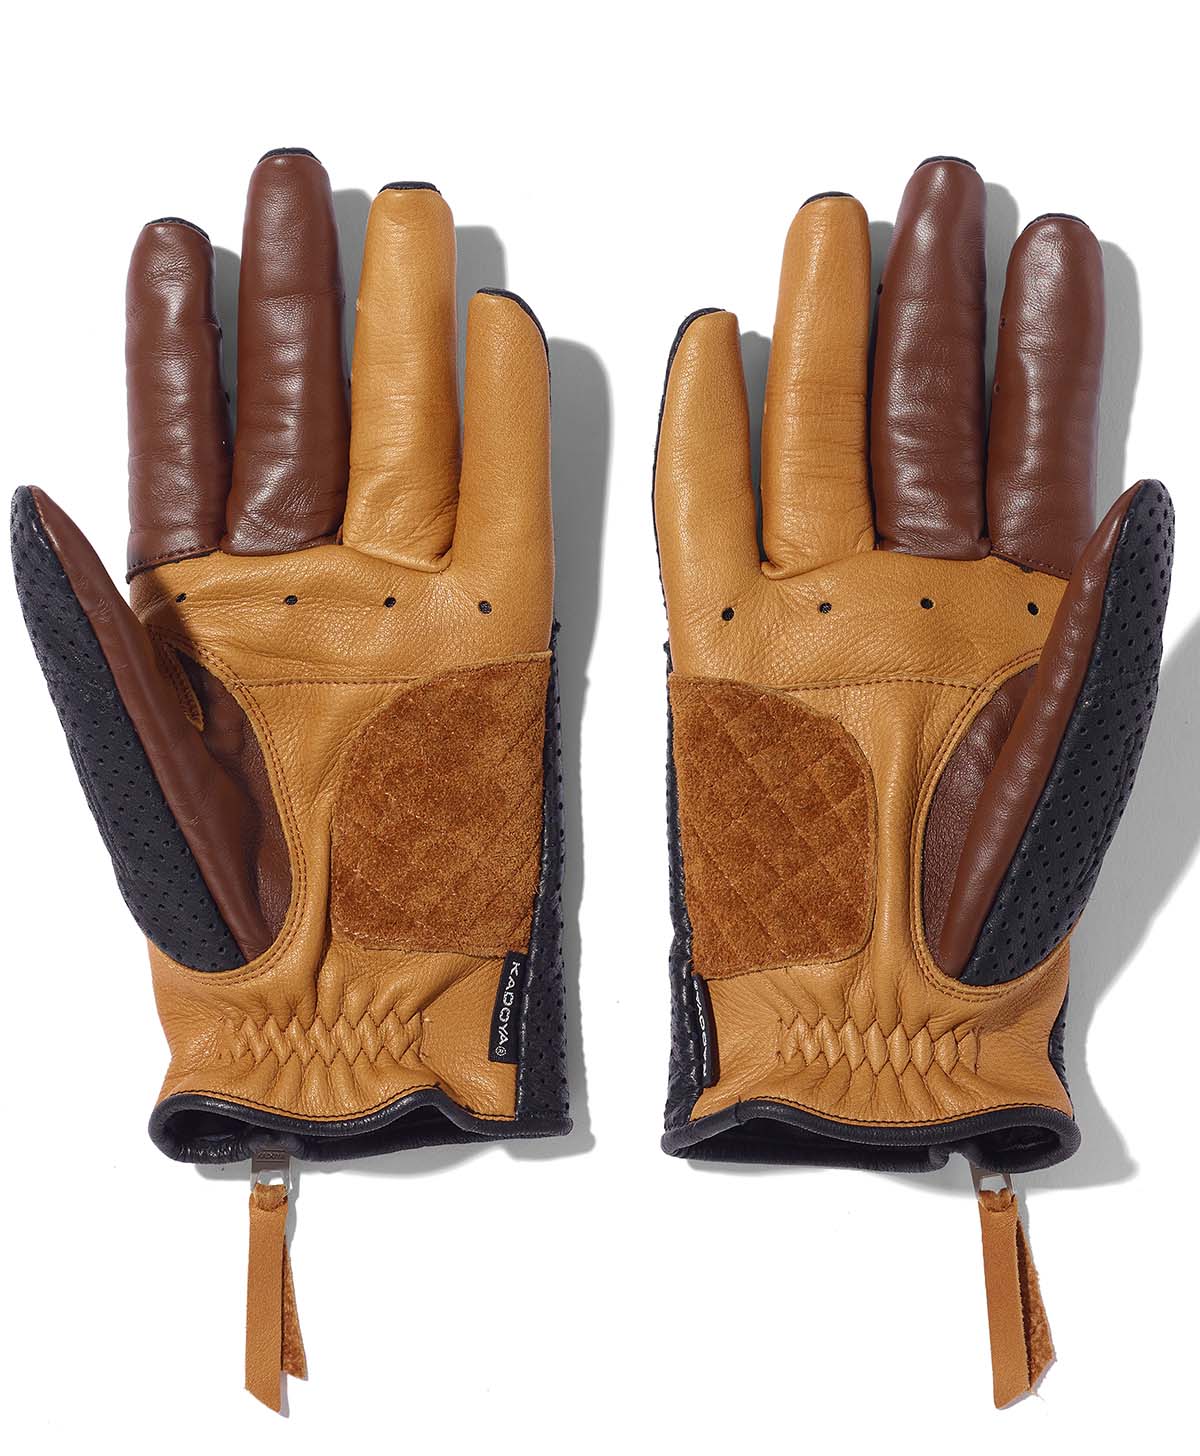 Rox Glove -pl / Black / Brown (feminino)